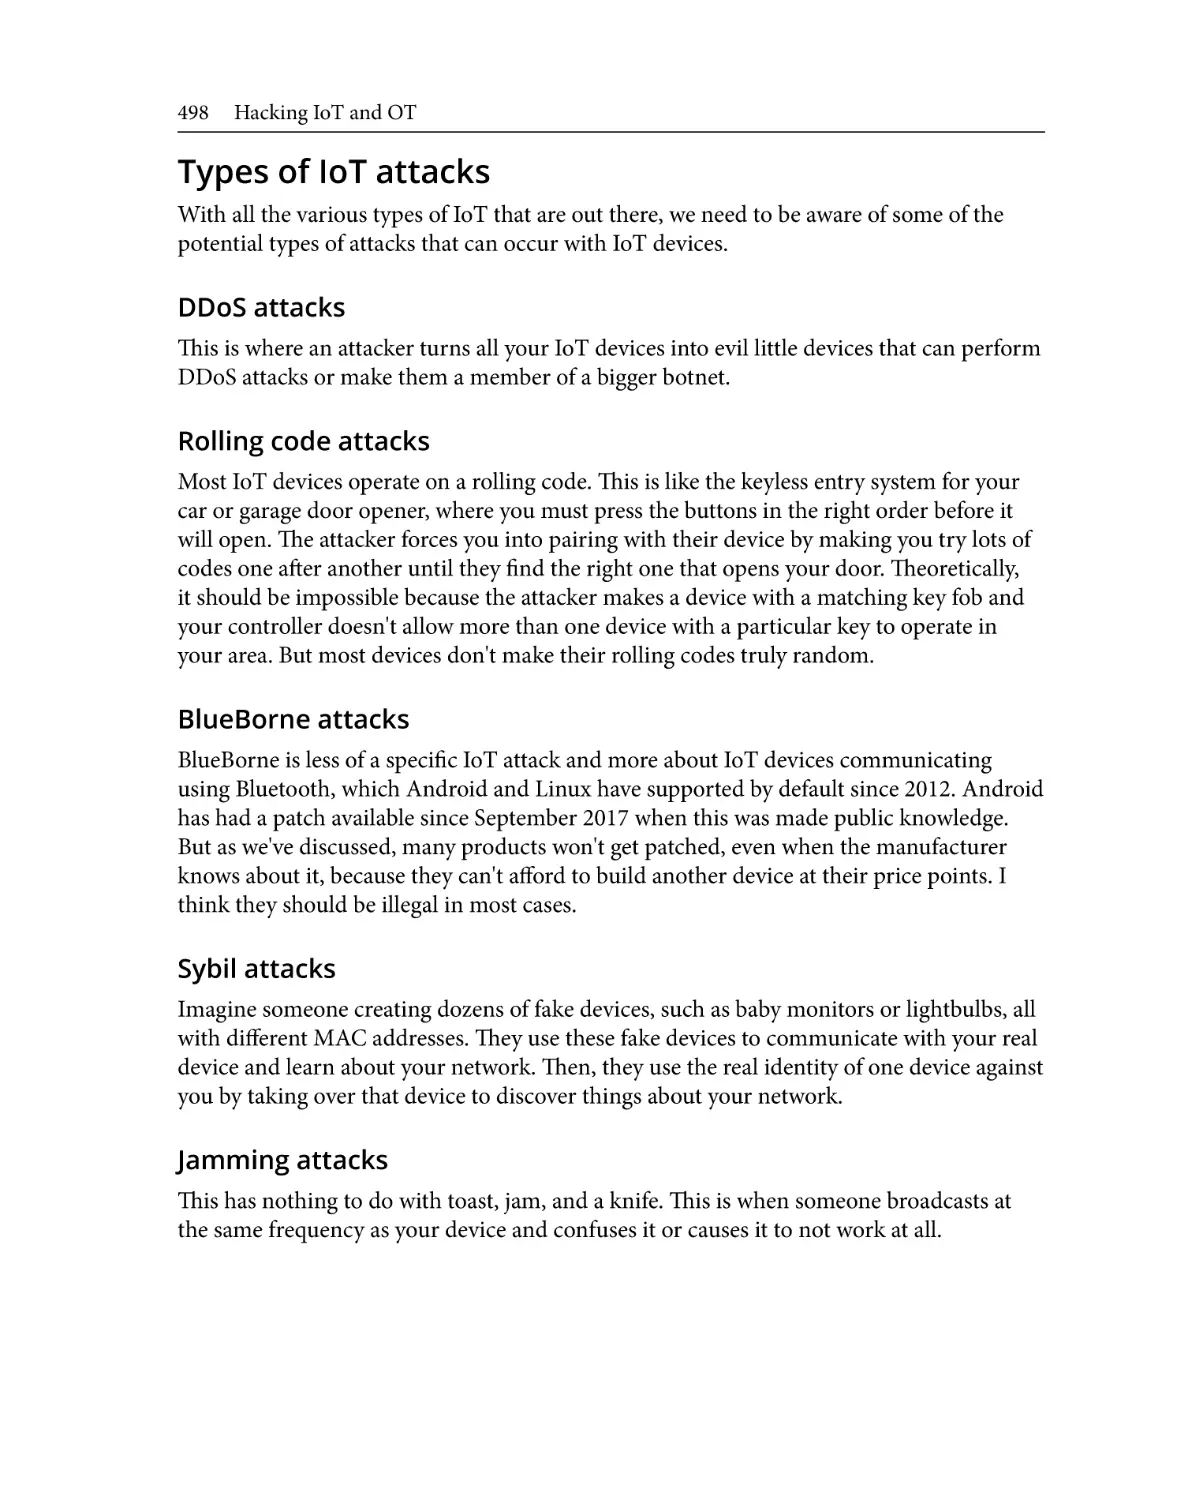 Types of IoT attacks